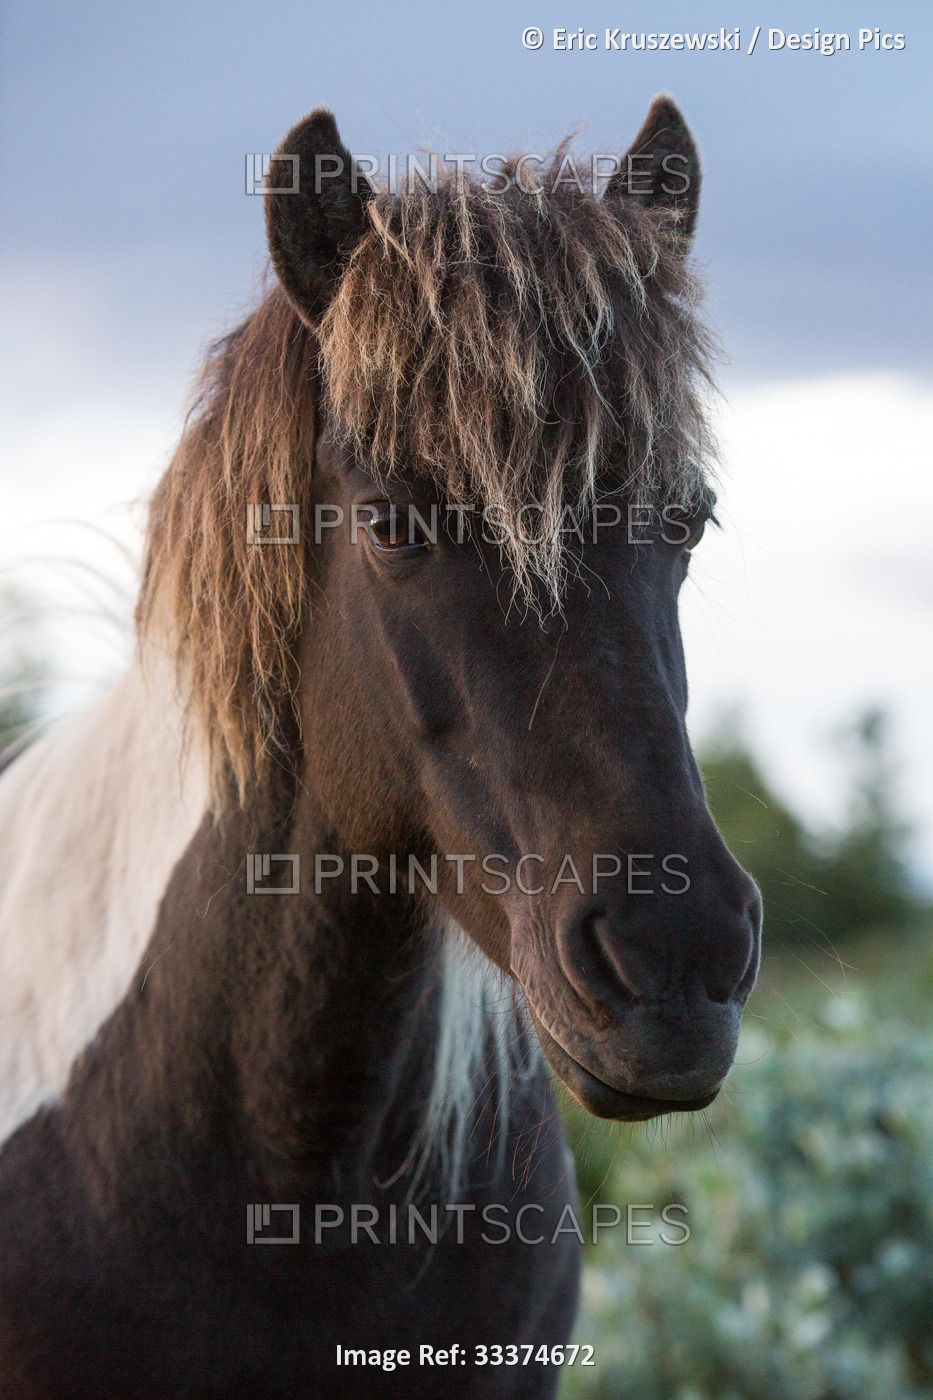 A portrait of an Icelandic horse.; Gljasteinn, Iceland